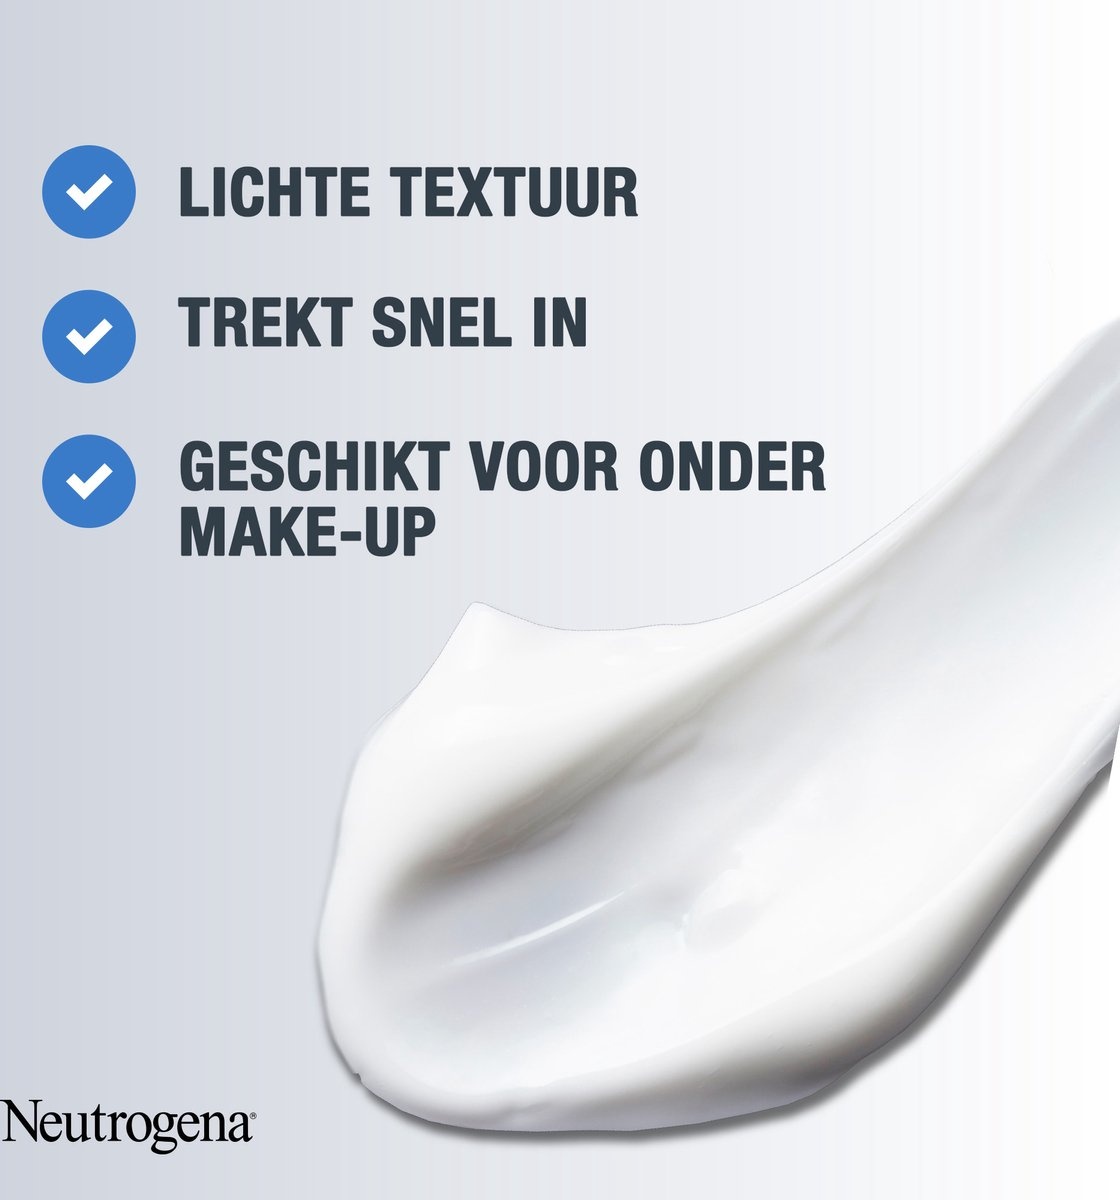 Neutrogena Retinol Boost Day Cream SFP 15 (50ml) - Verpakking beschadigd